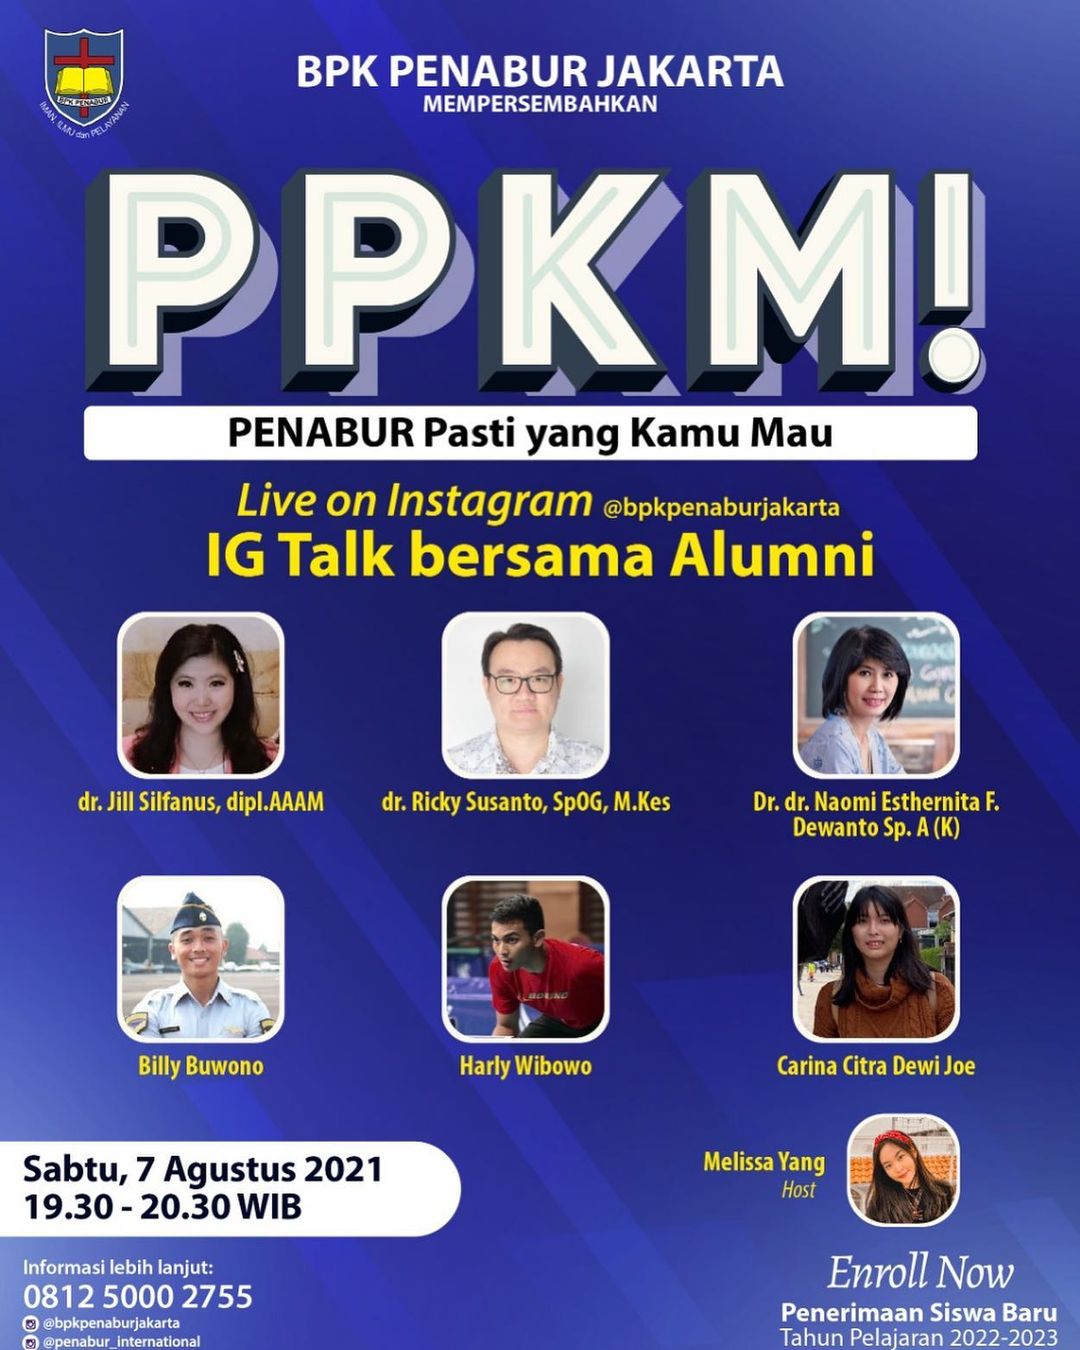 PENABUR Pasti Kamu Mau #PPKM - IG Talk bersama Alumni BPK PENABUR Jakarta